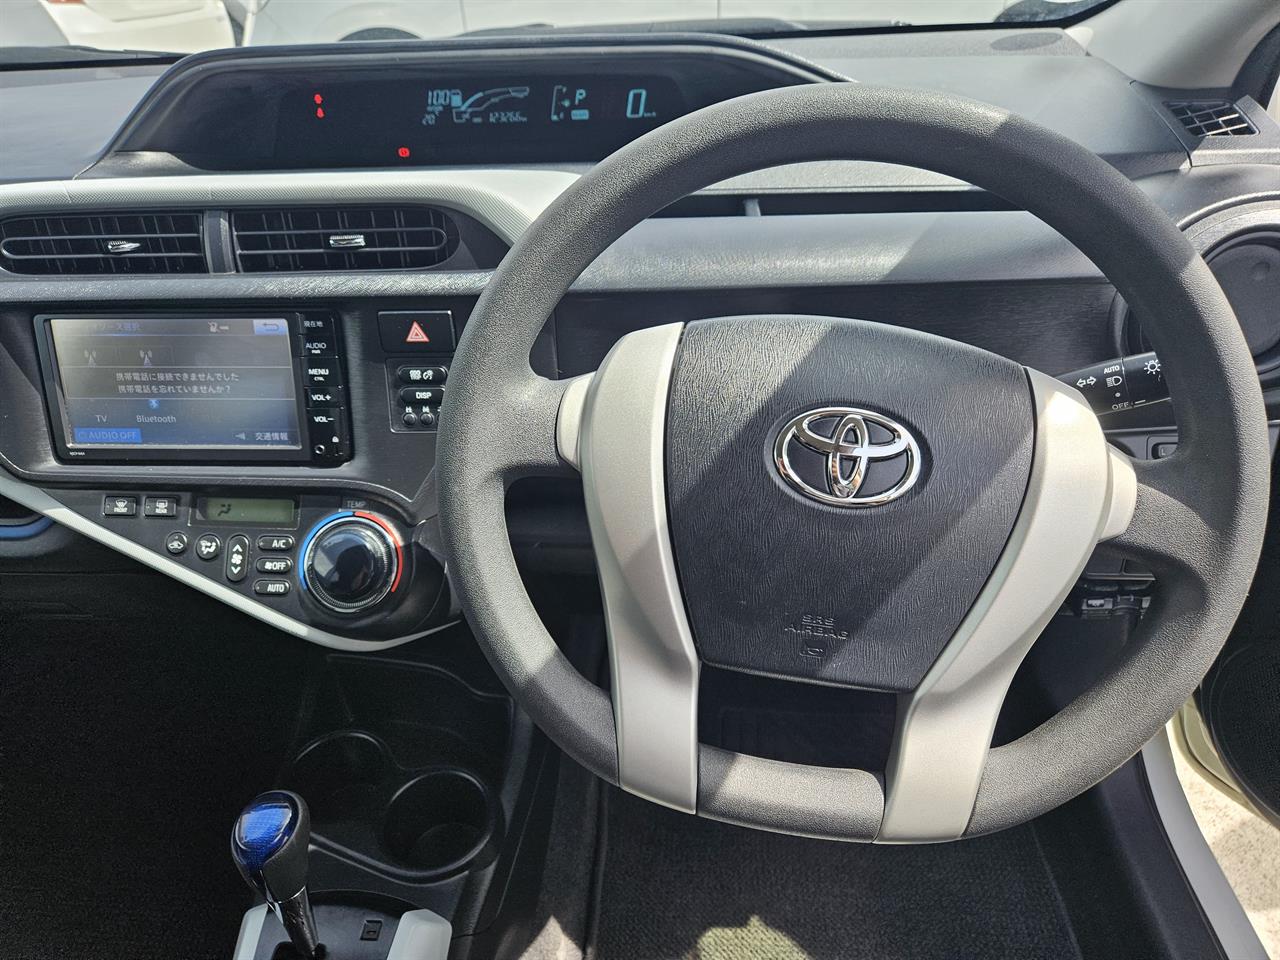 2014 Toyota Aqua Hybrid 